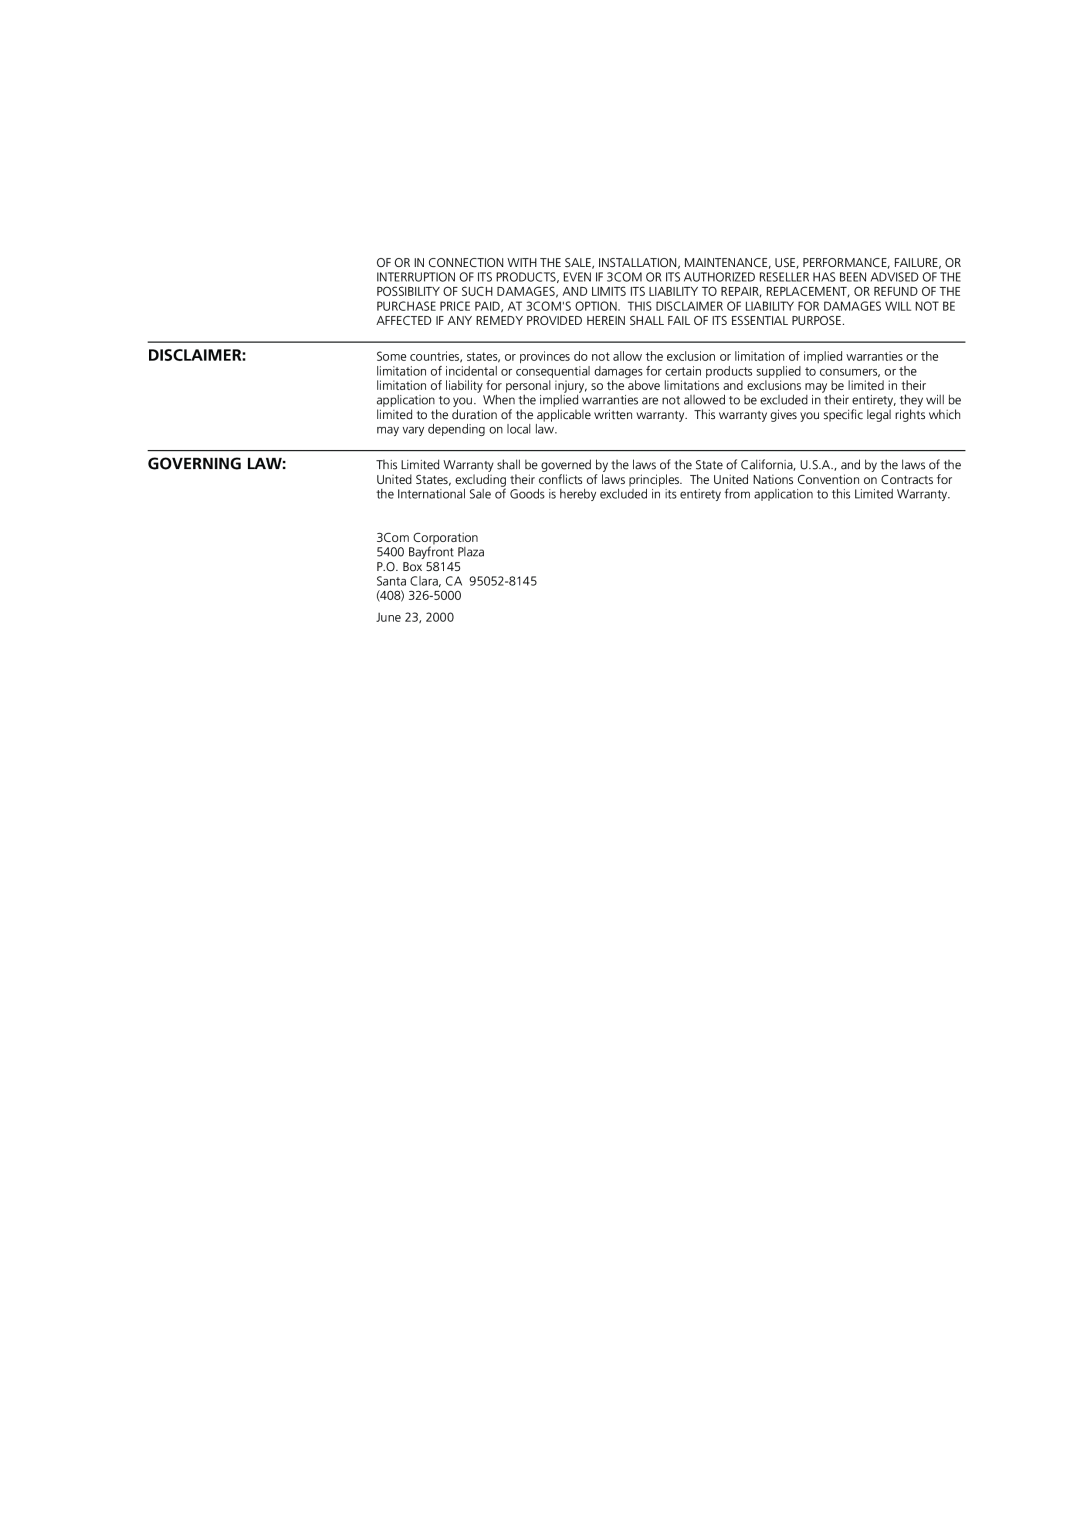 3Com DUA1698 manual Disclaimer, Governing Law 